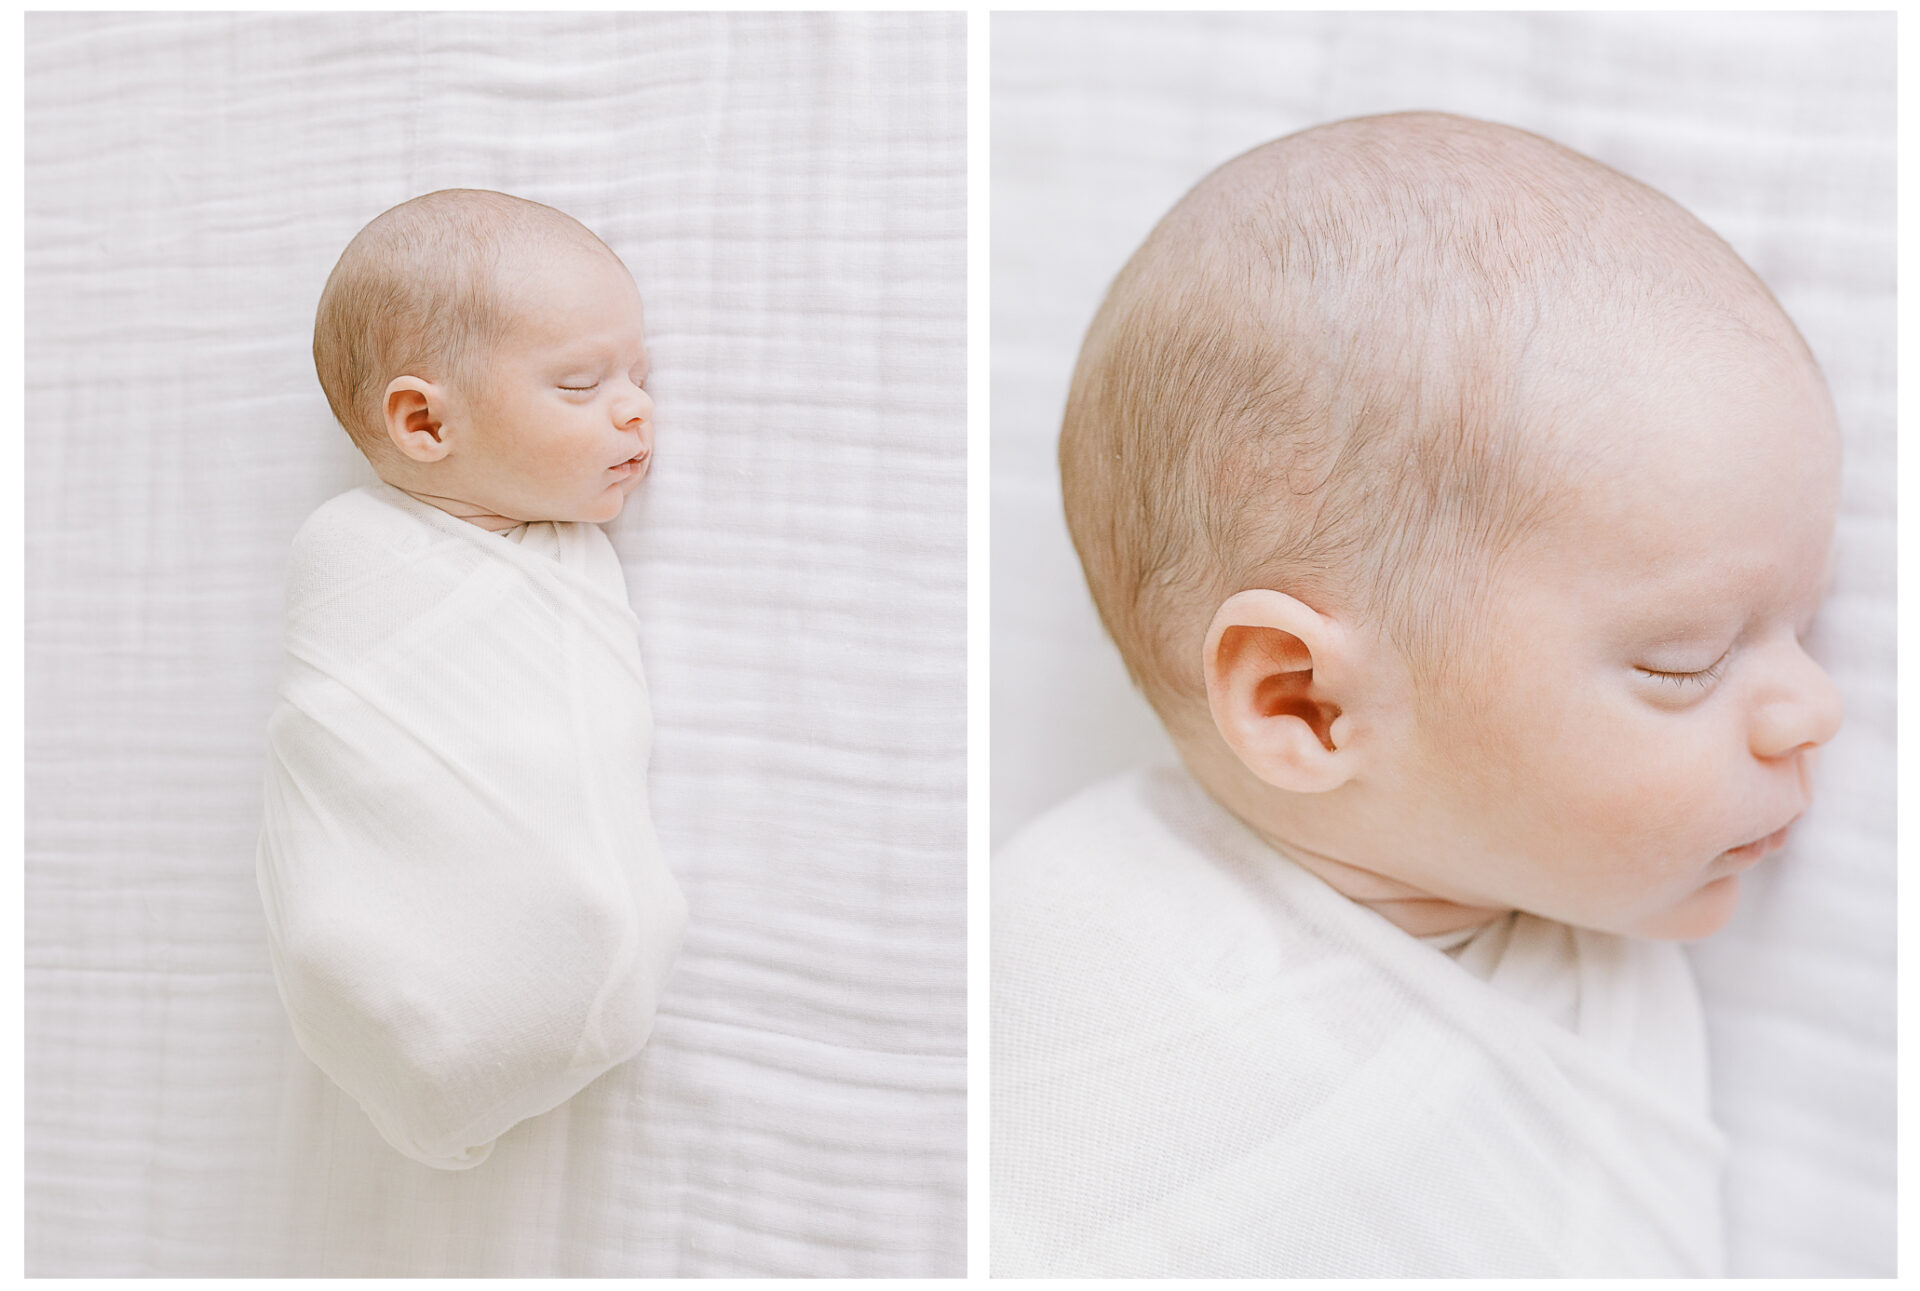 Newborn baby boy swaddled in a white wrap sleeping